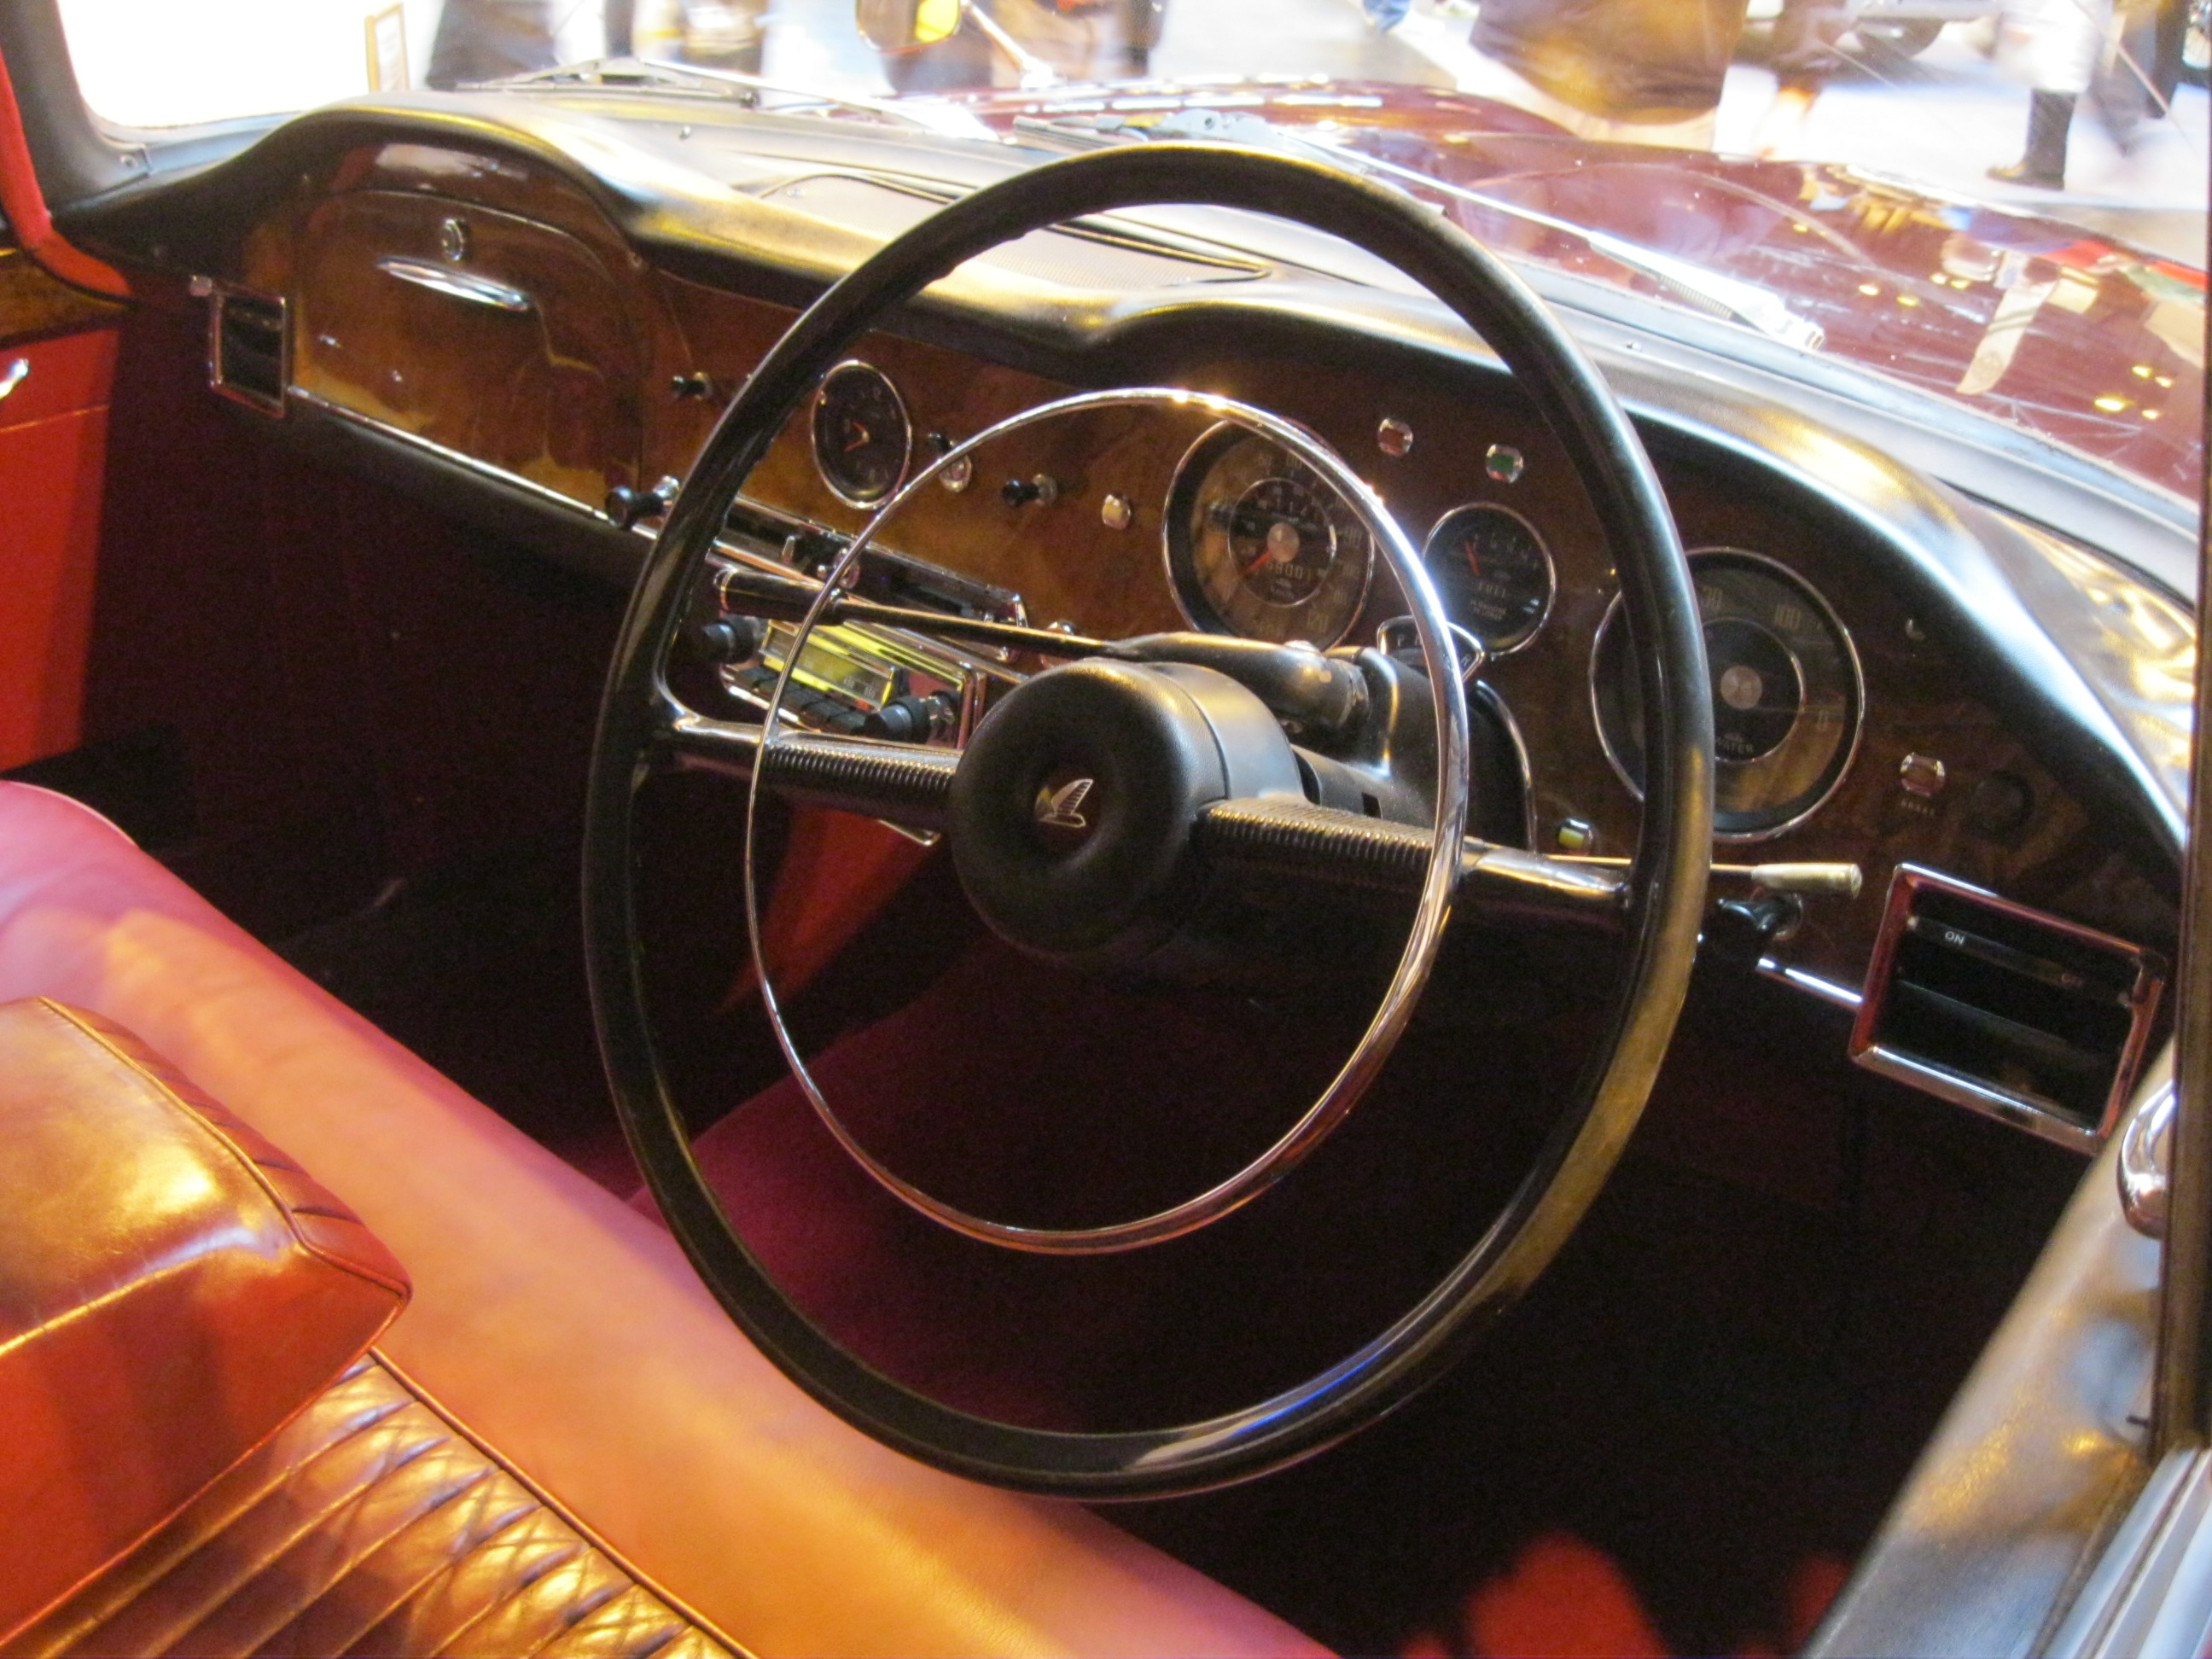 car interior shot